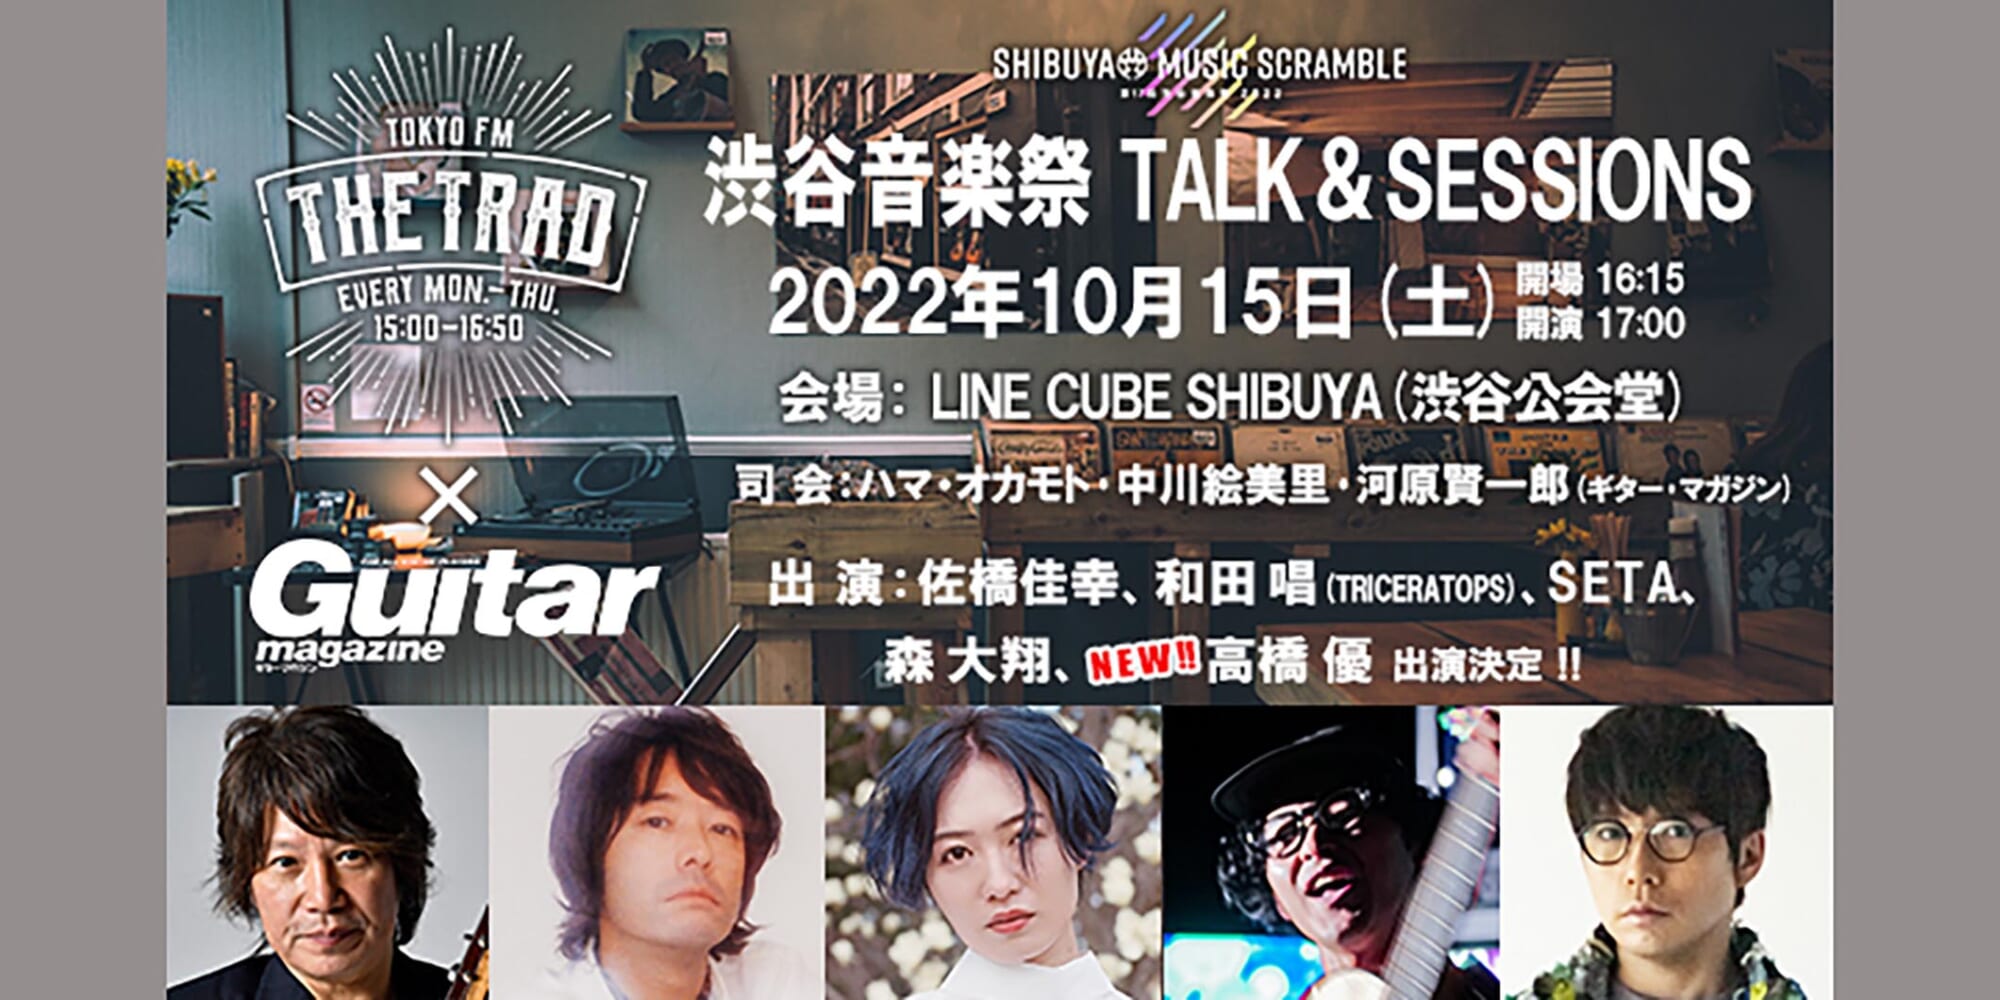 TOKYO FMのラジオ番組『THE TRAD』とギター・マガジンのコラボ・イベント、10/15に渋谷で開催！